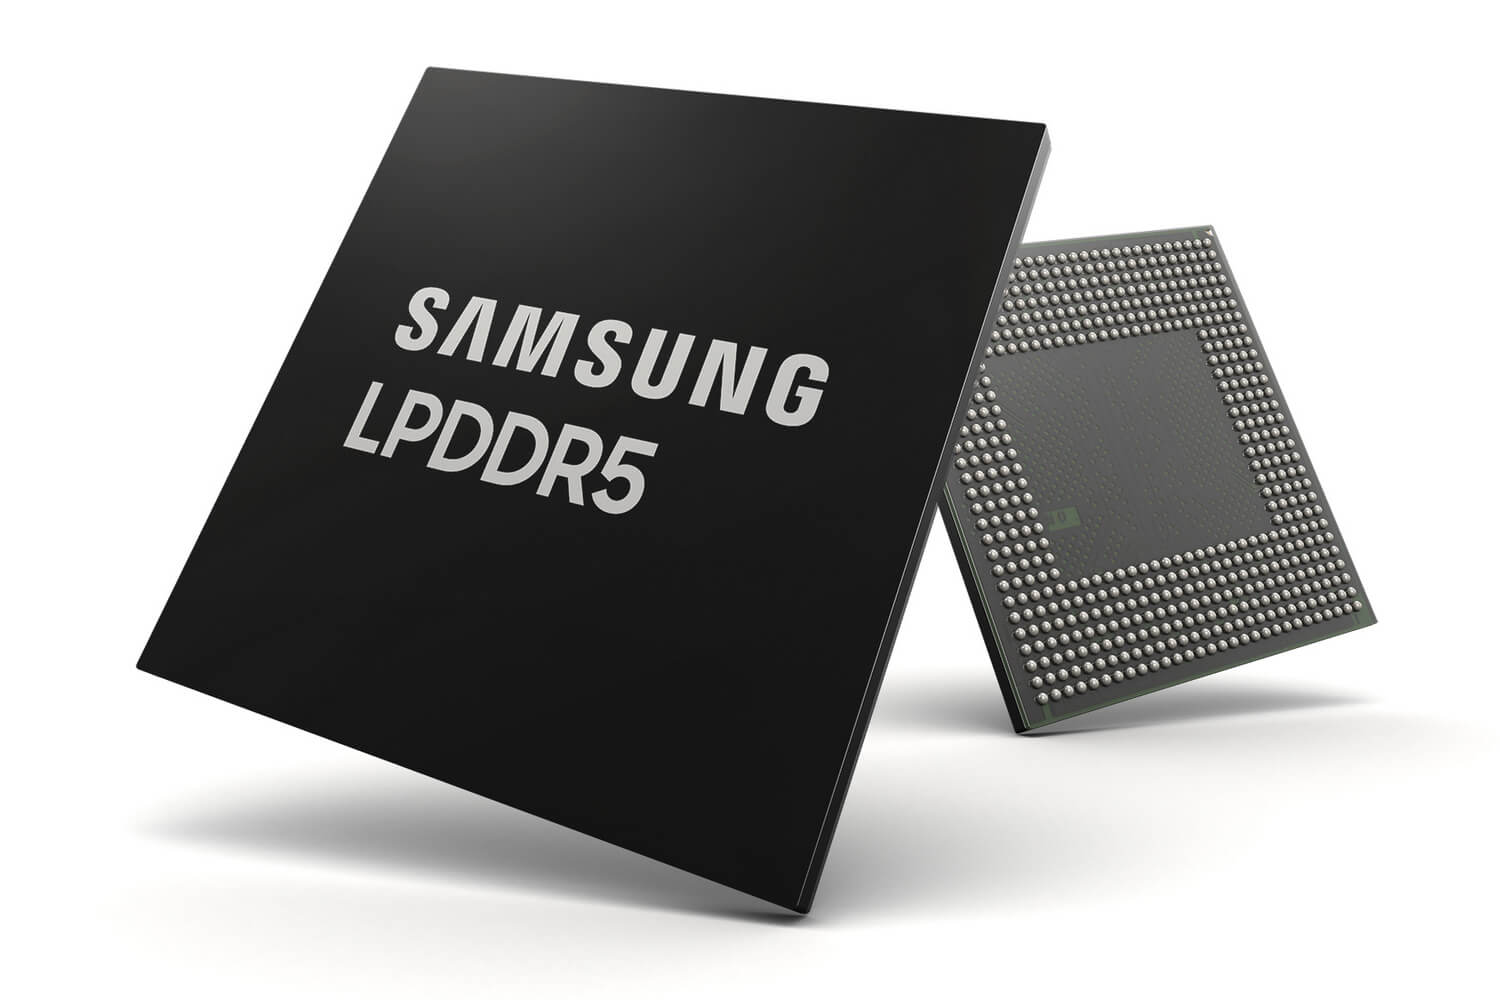 Samsung LPDDR5